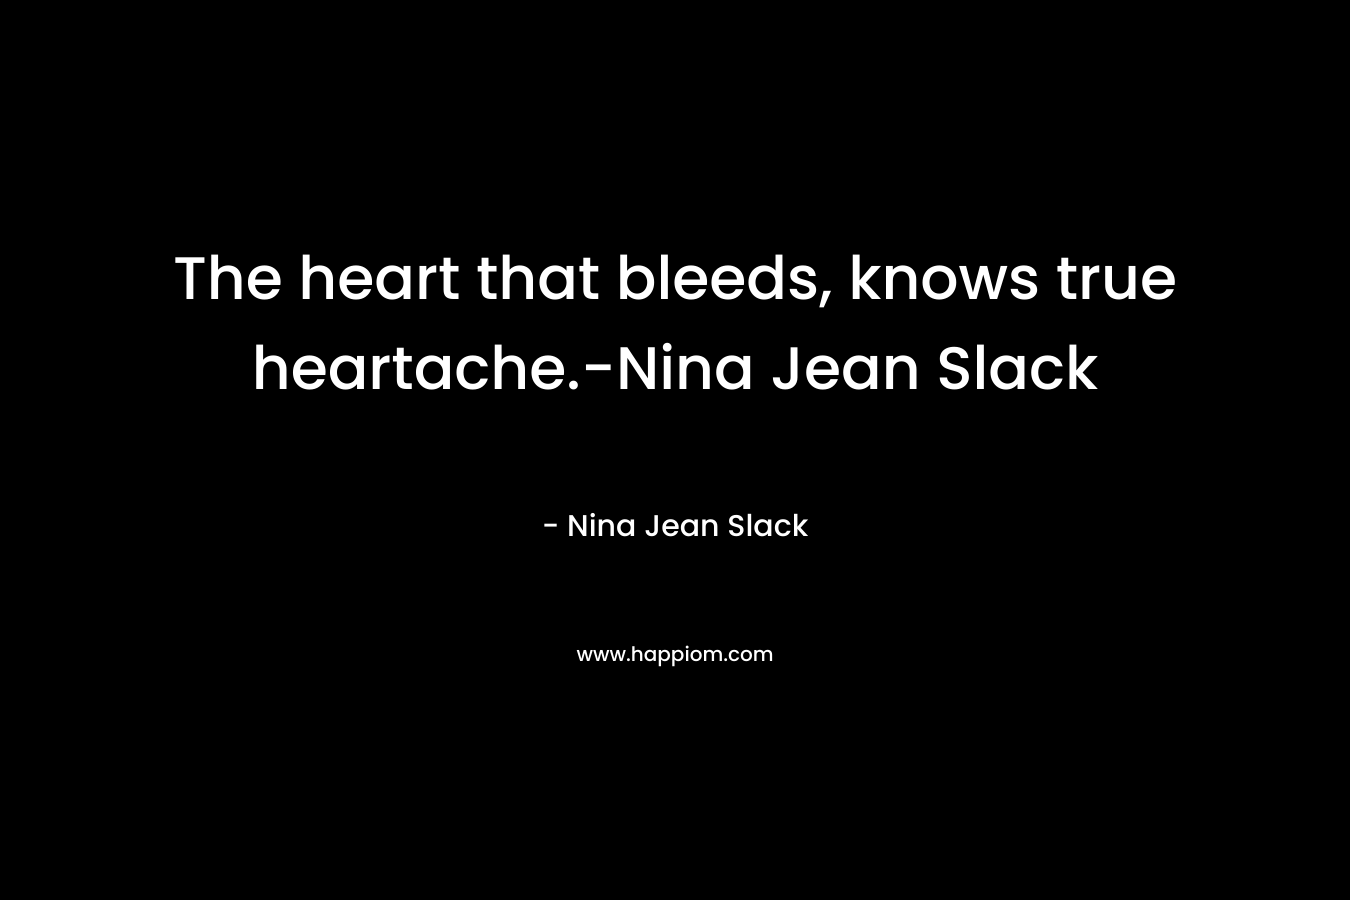 The heart that bleeds, knows true heartache.-Nina Jean Slack